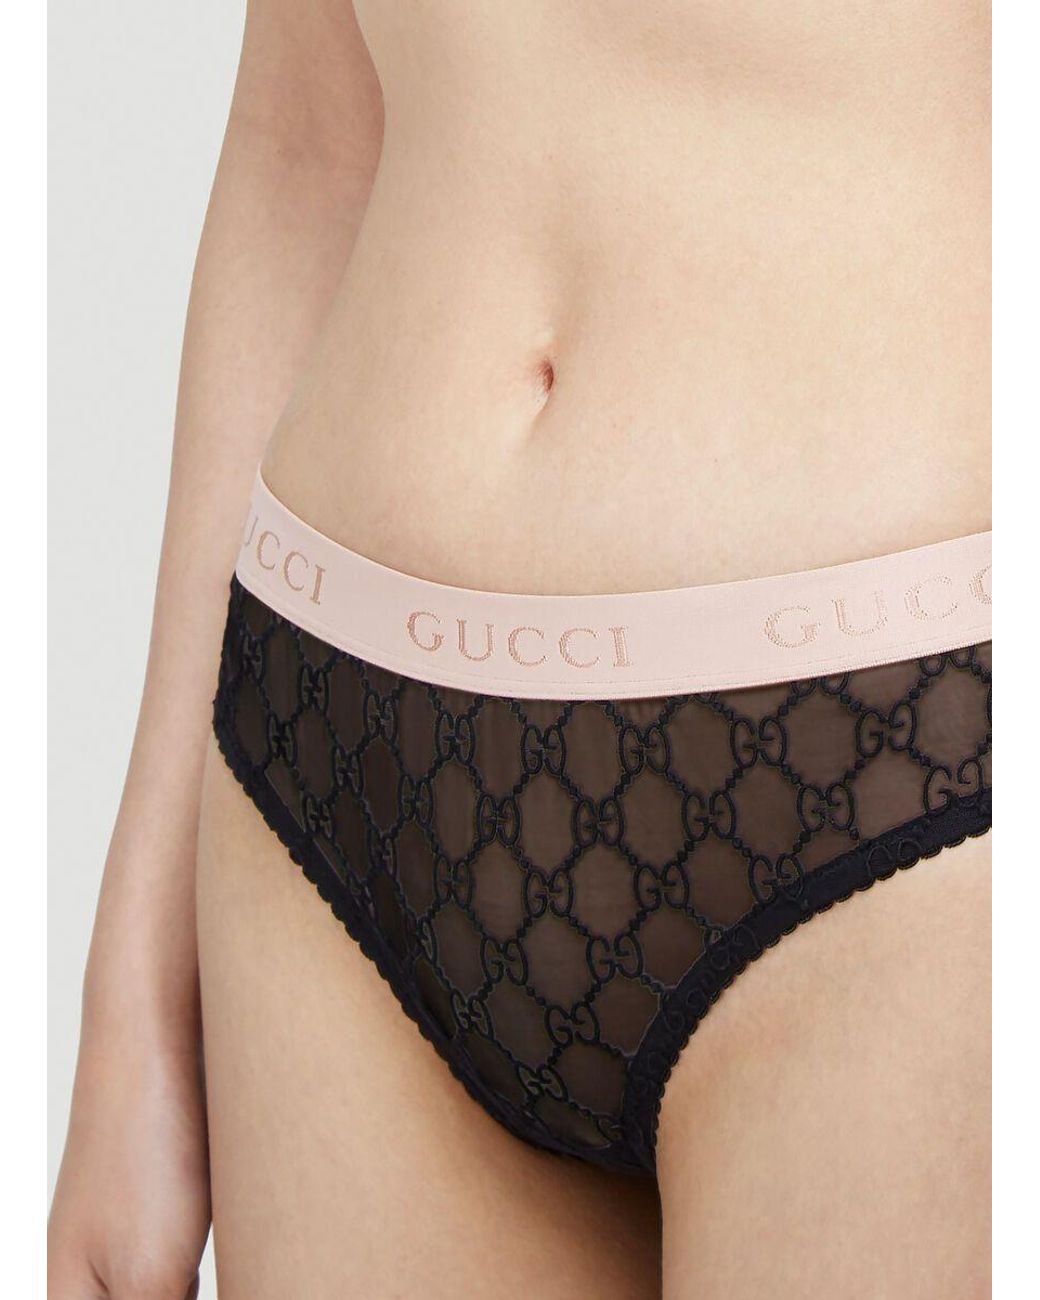 Gucci Underwear -  Canada